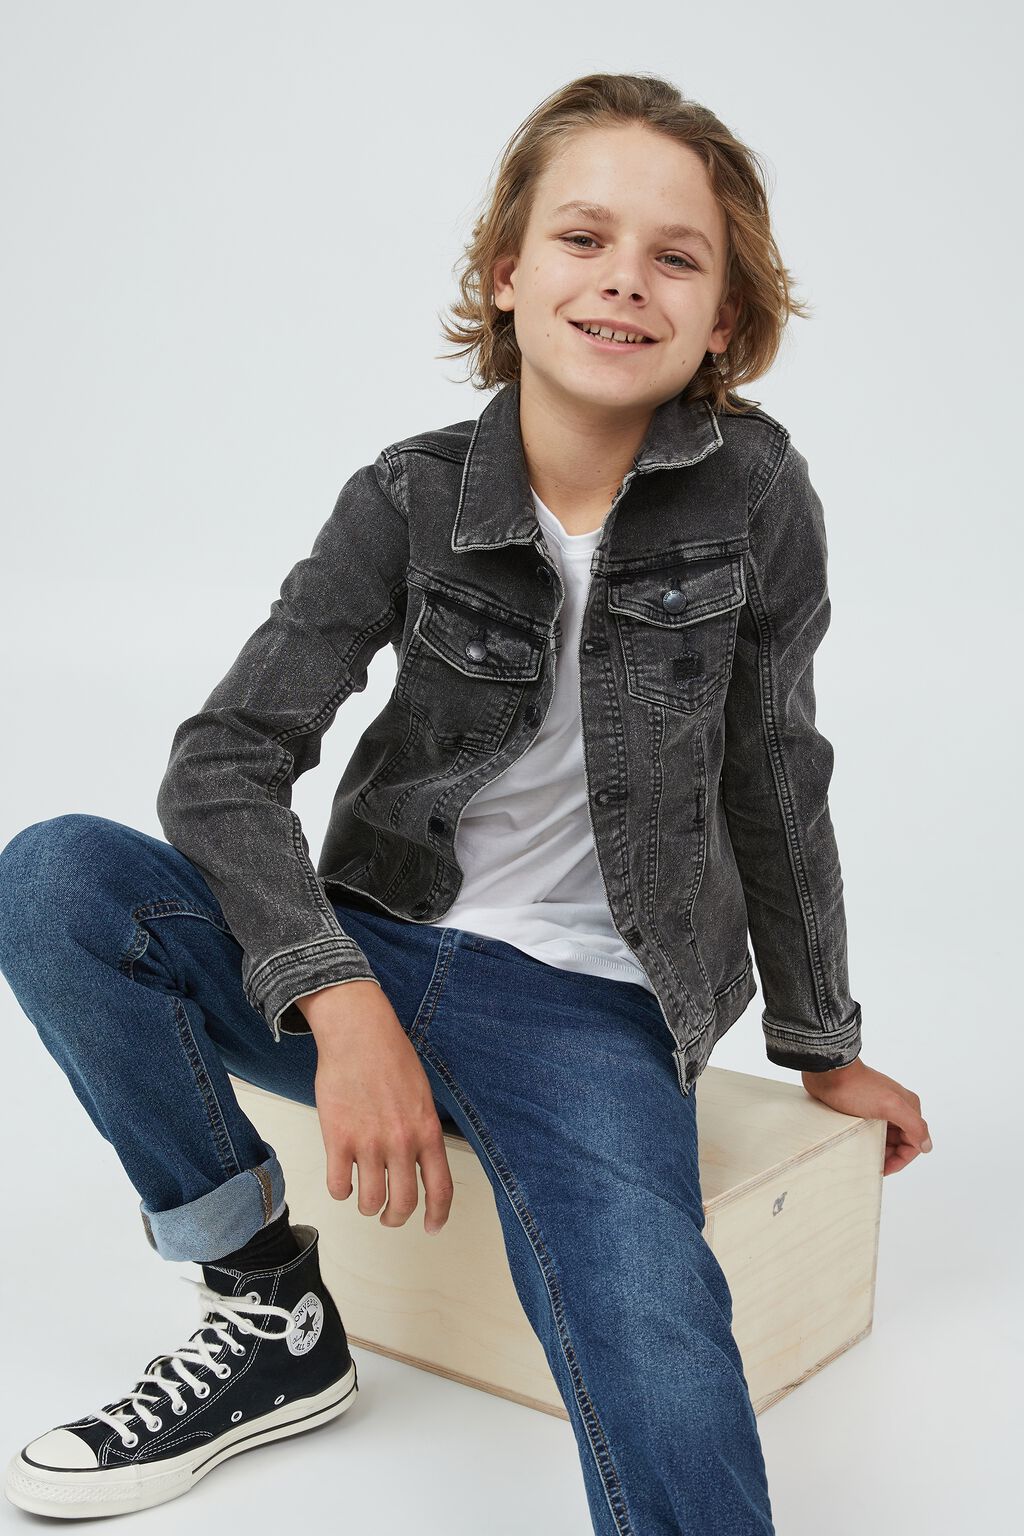 Boys Jackets - Puffer, Denim & Bomber Jackets | Cotton On Kids